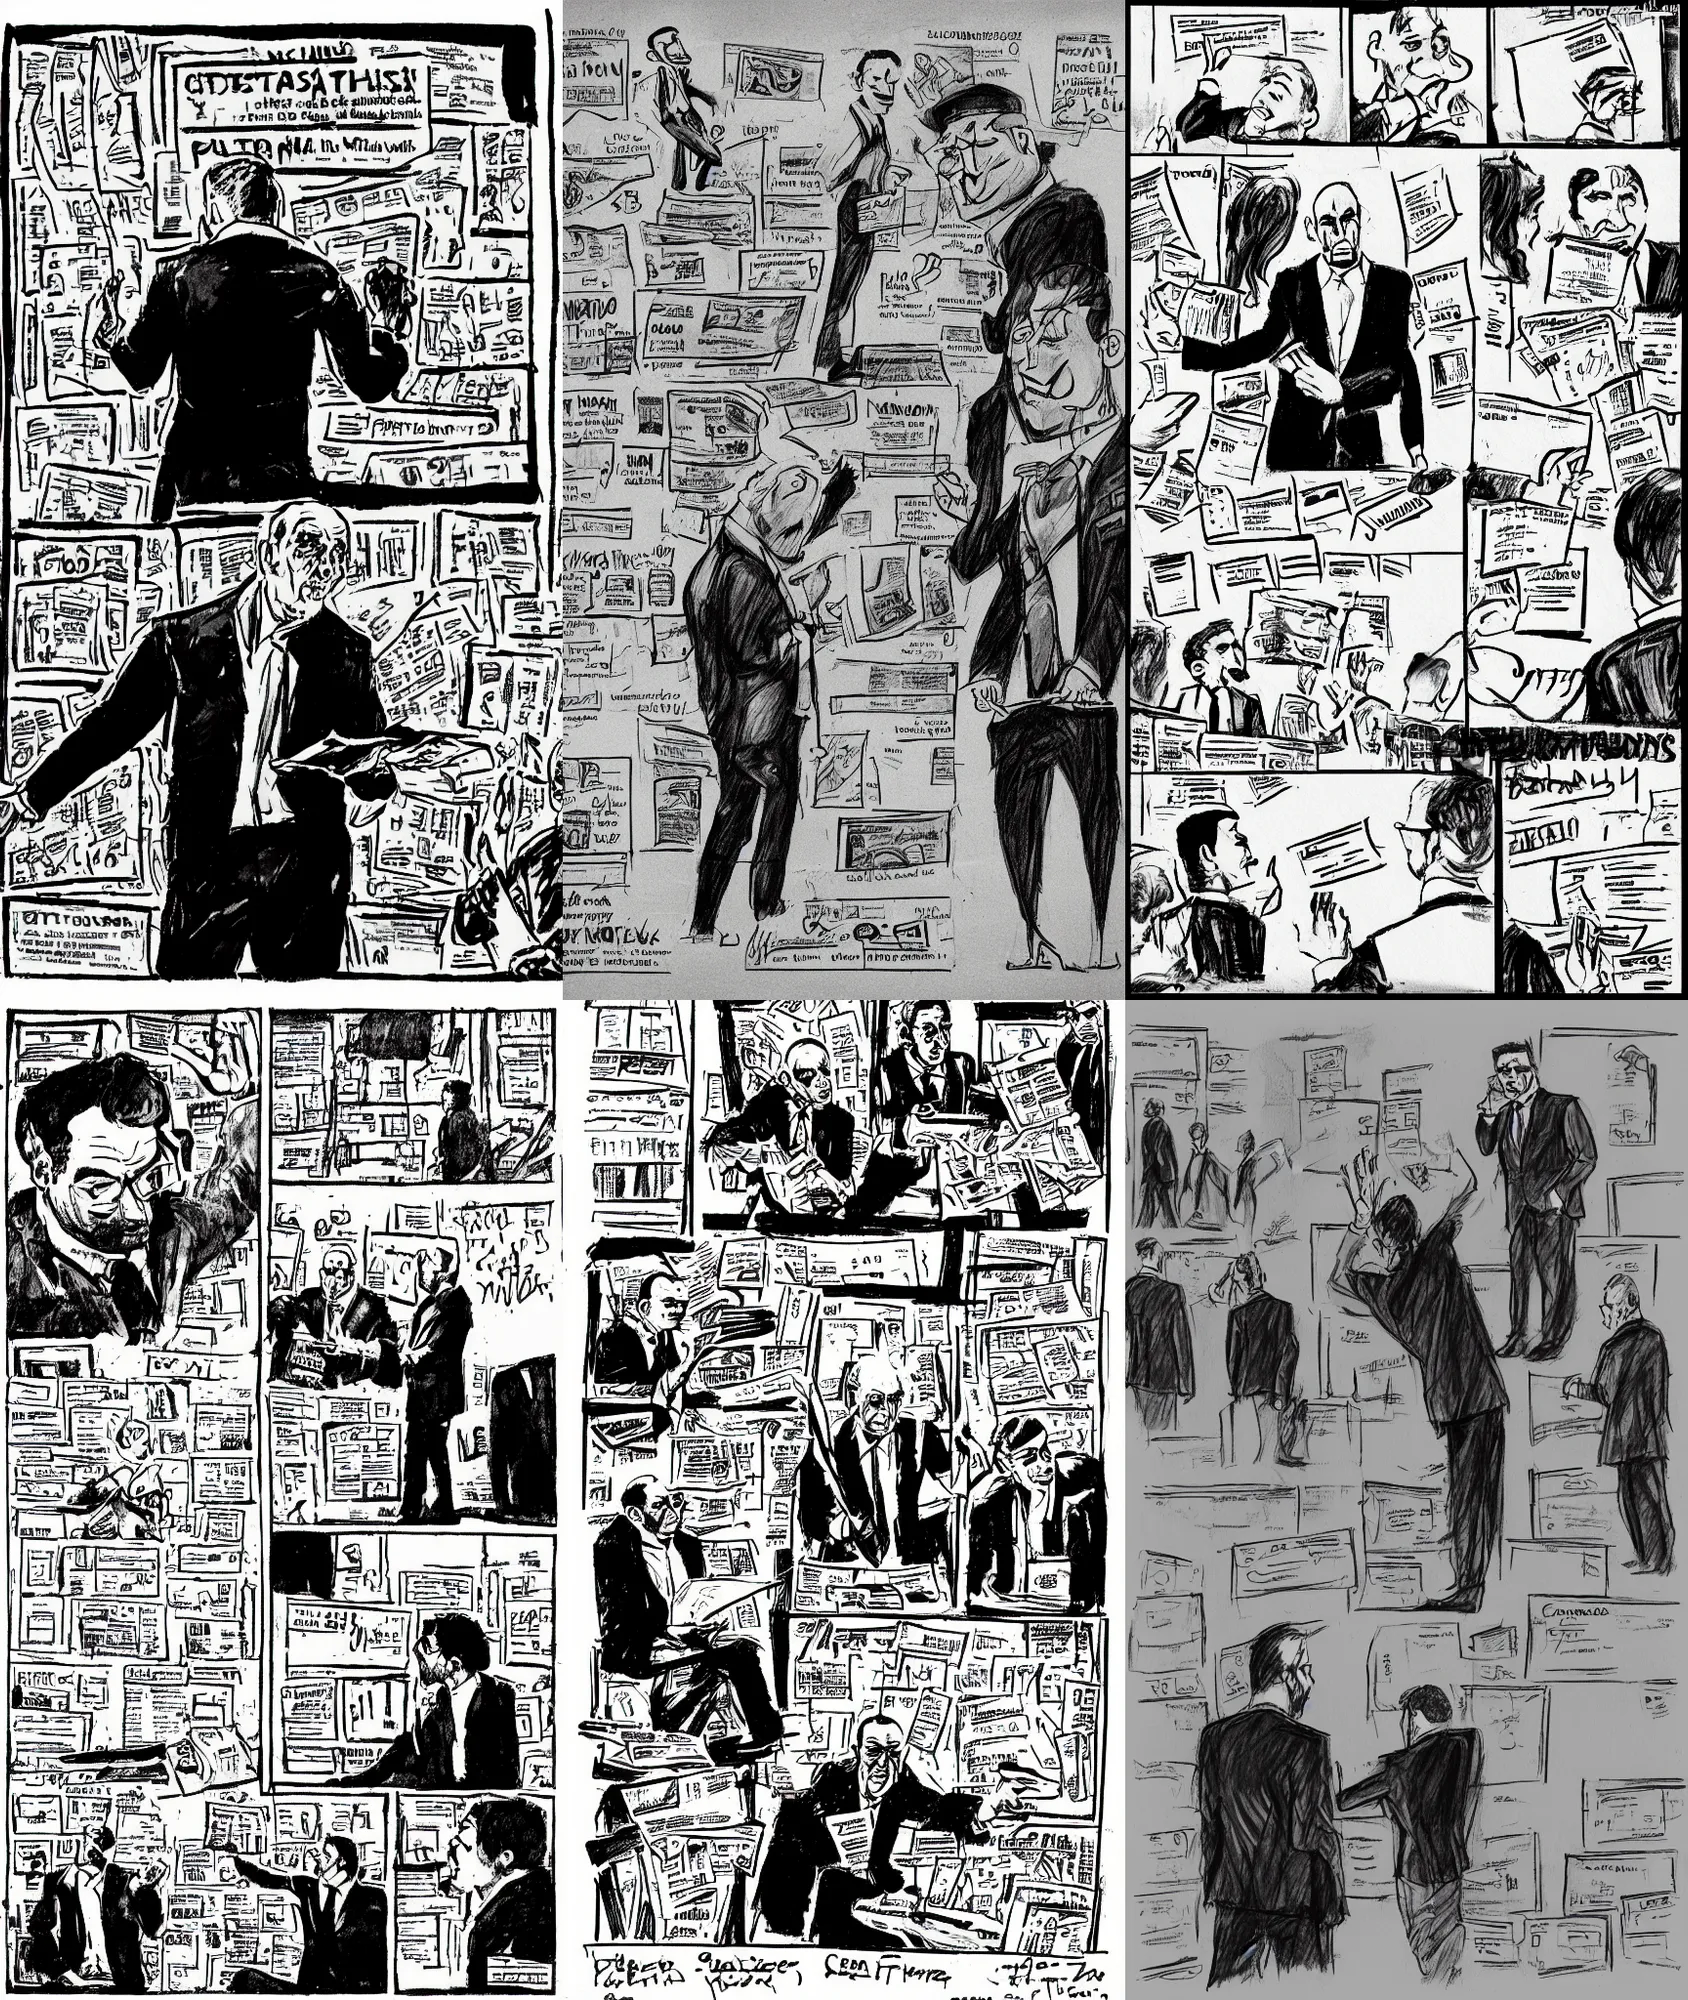 Prompt: newspaper comic strip, italian mafia man giving business presentation on whiteboard, cash stuffed into his pockets. B&W, sketch.